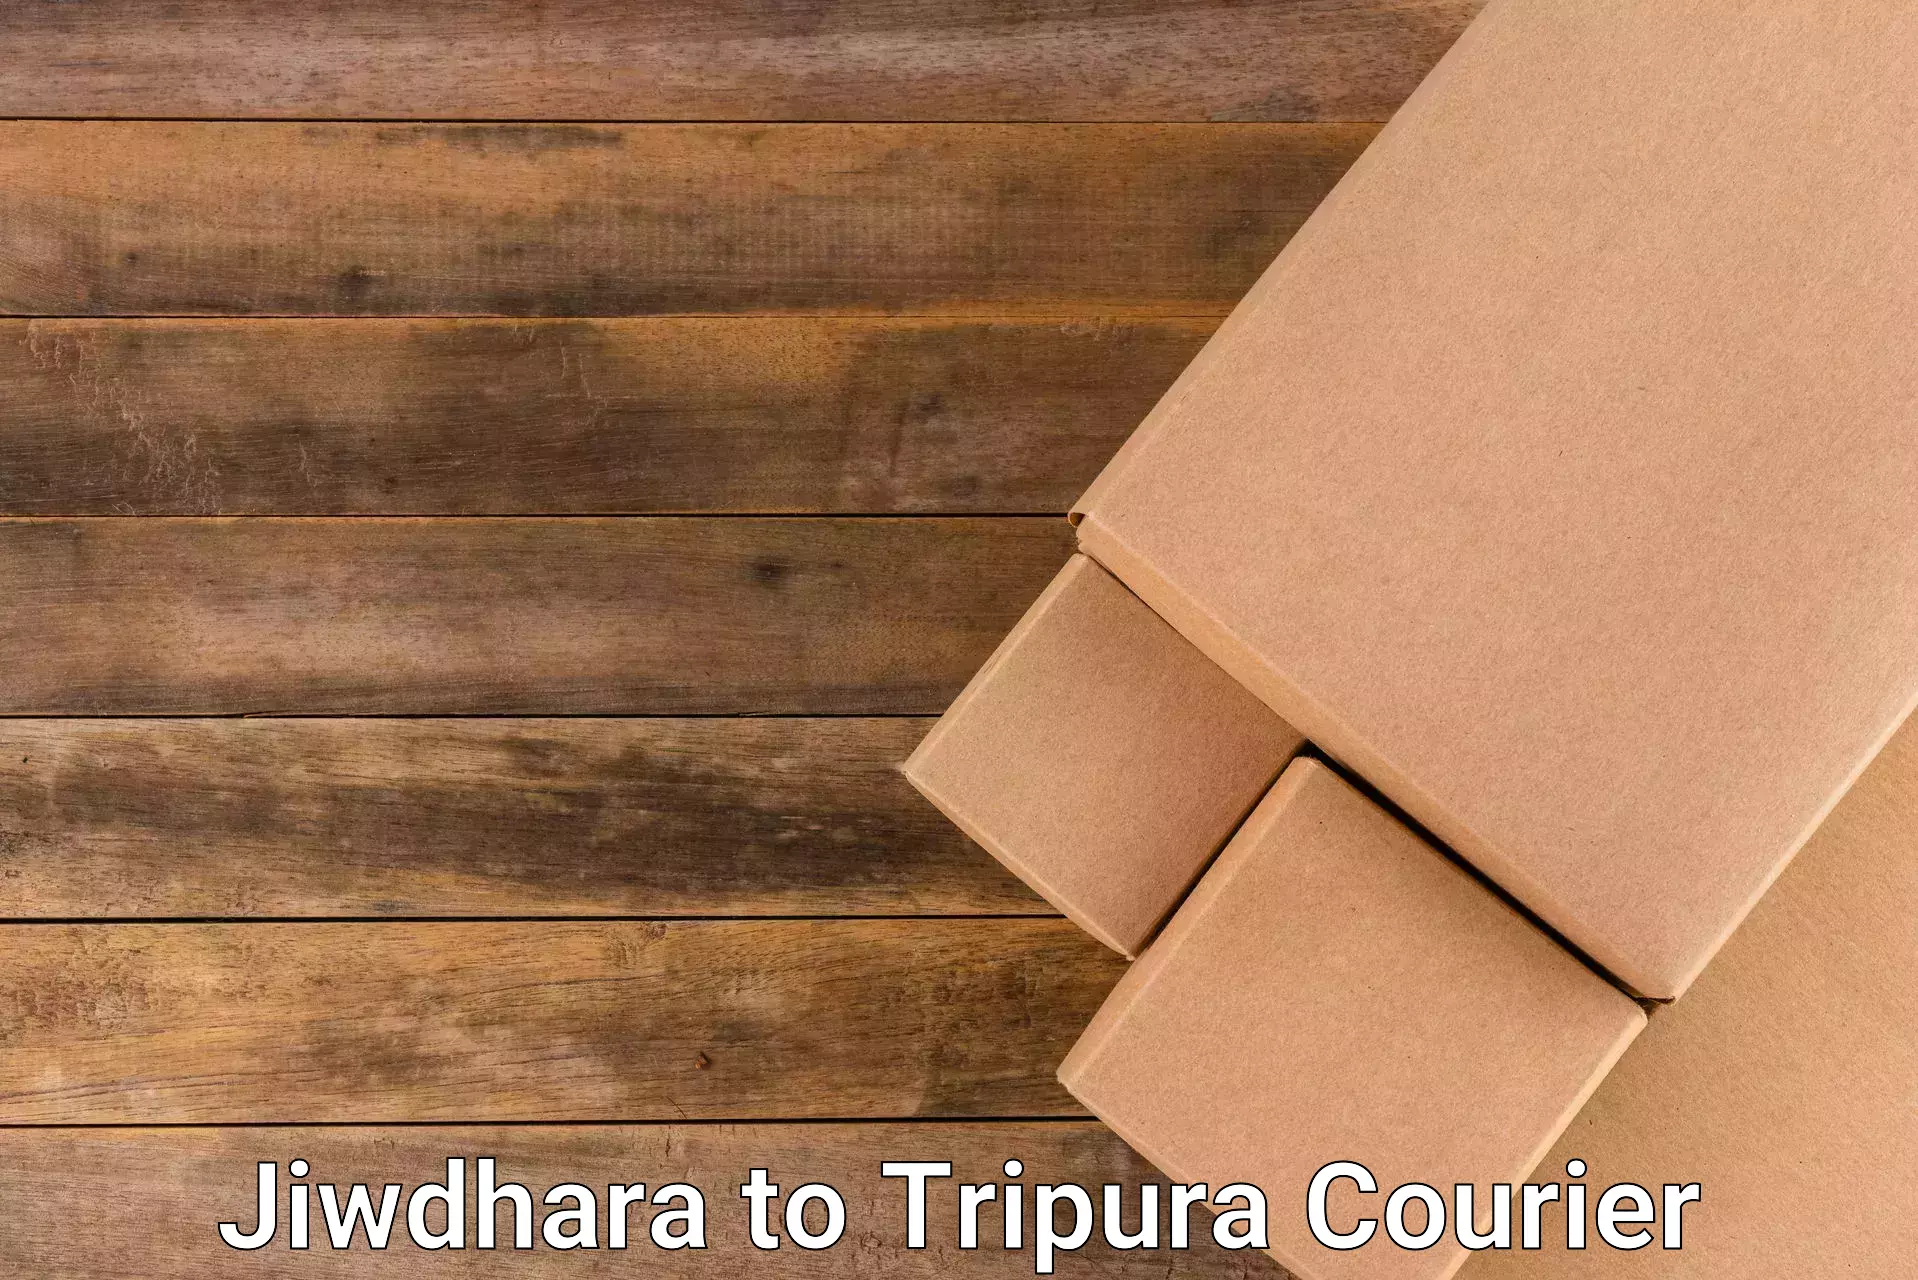 Next day courier Jiwdhara to Udaipur Tripura